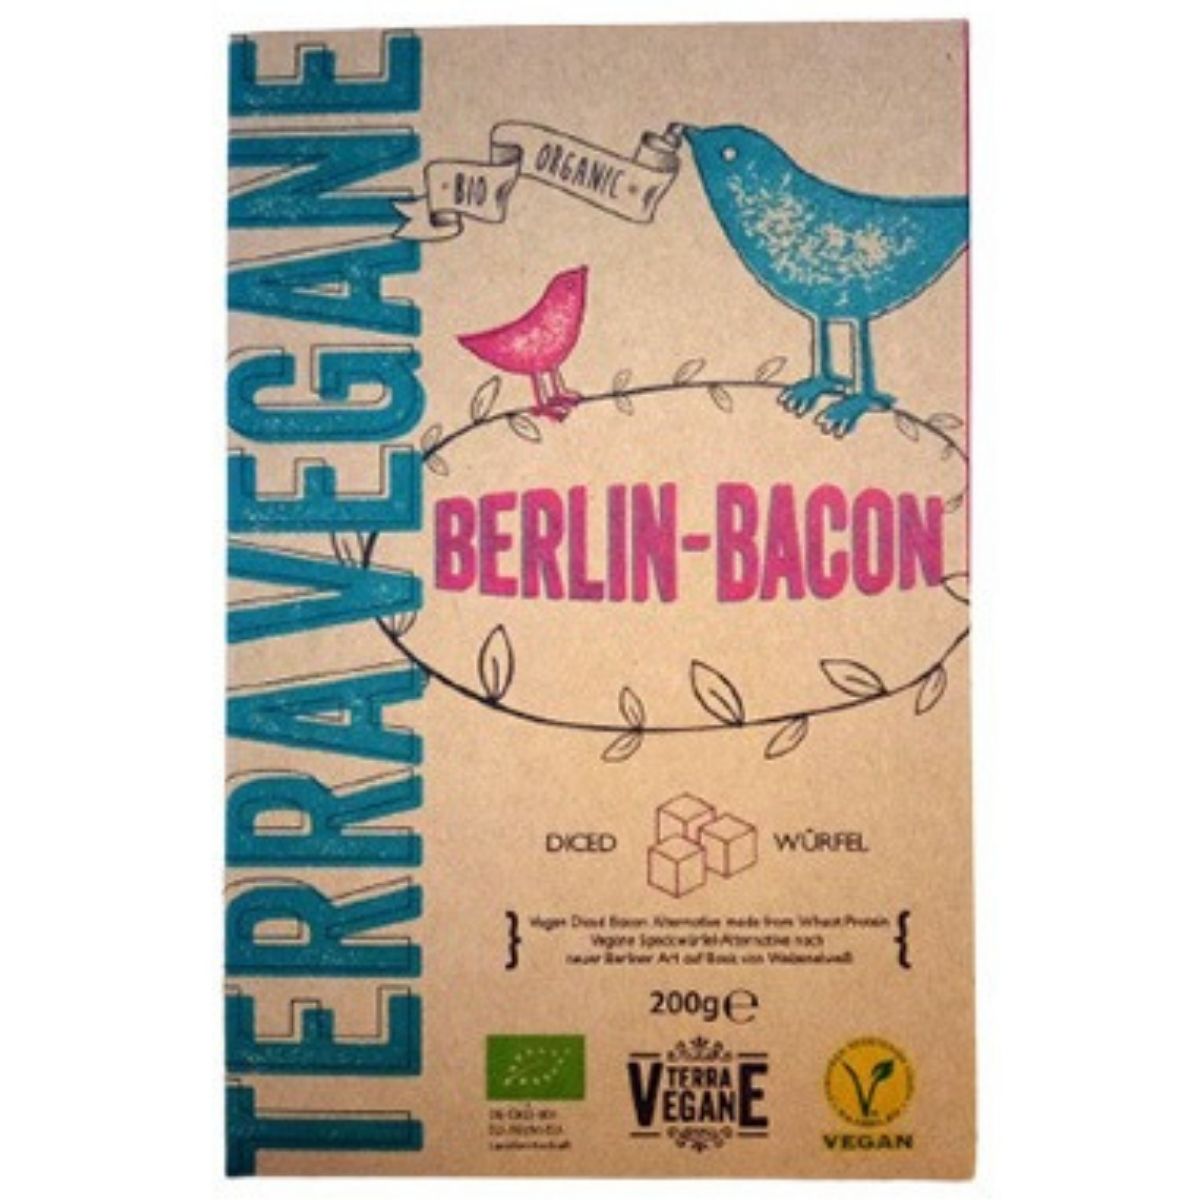 Terra Vegane Diced Berlin-Bacon - 200g